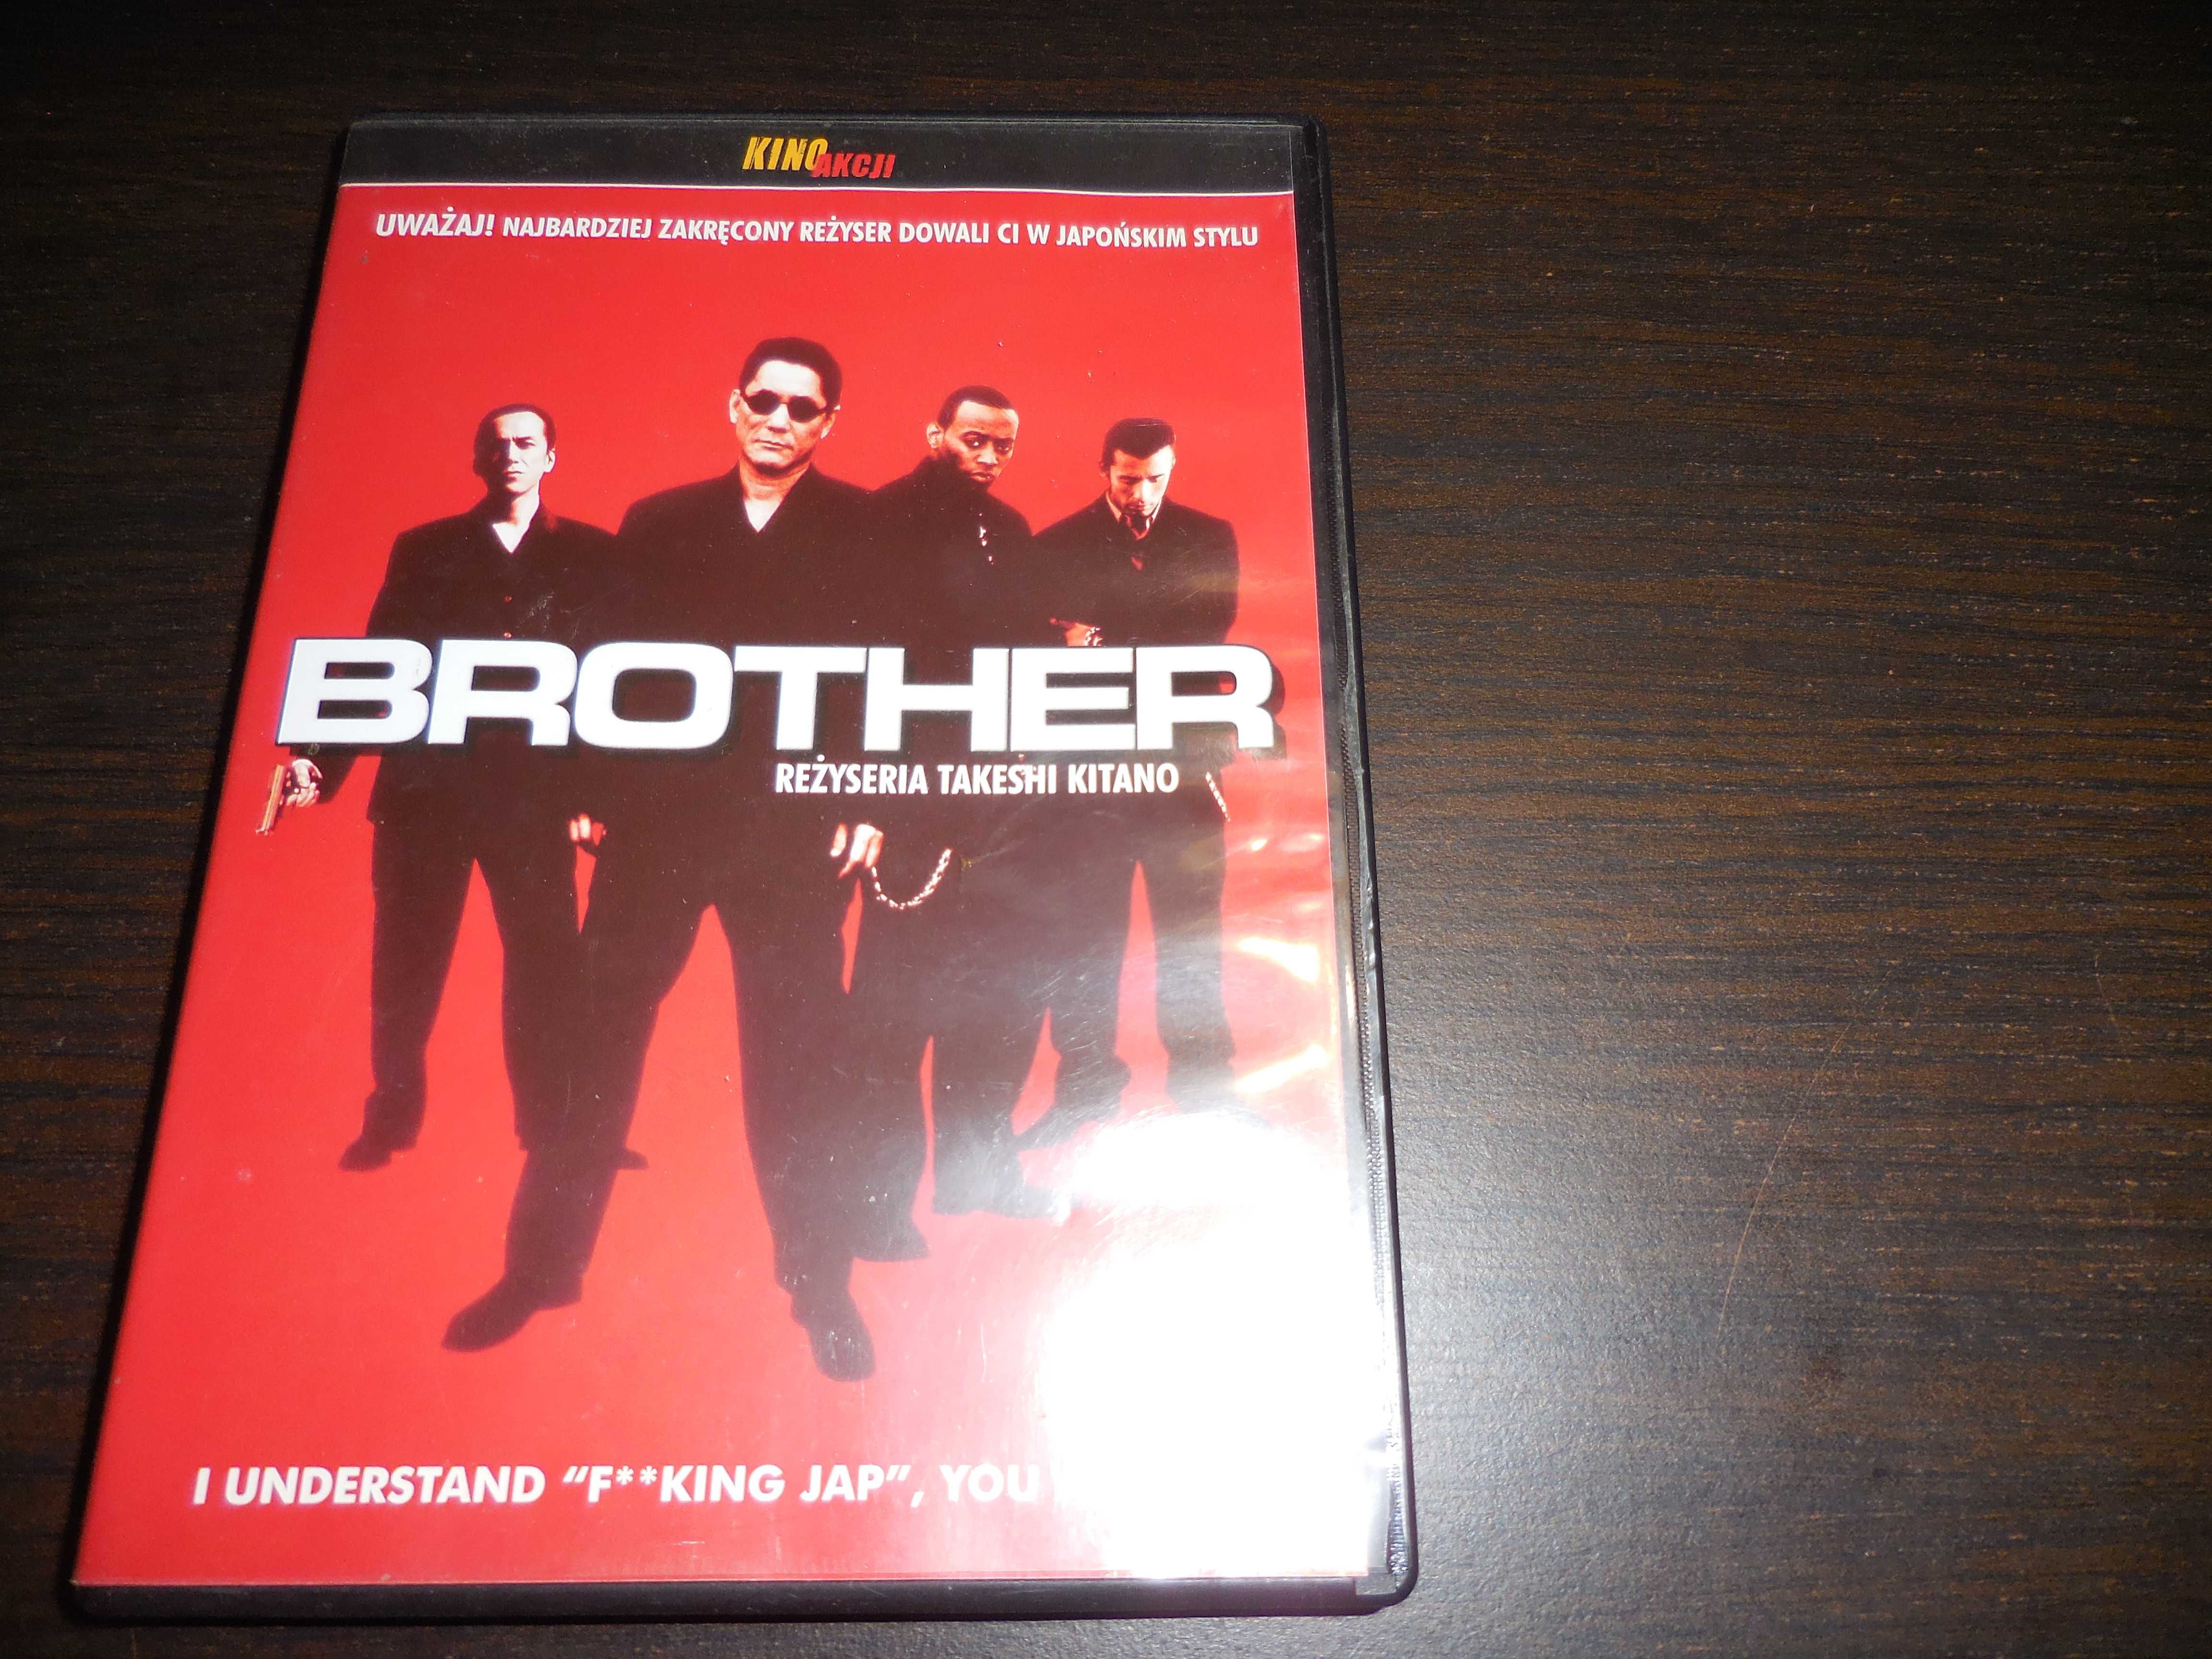 BROTHER - film japoński